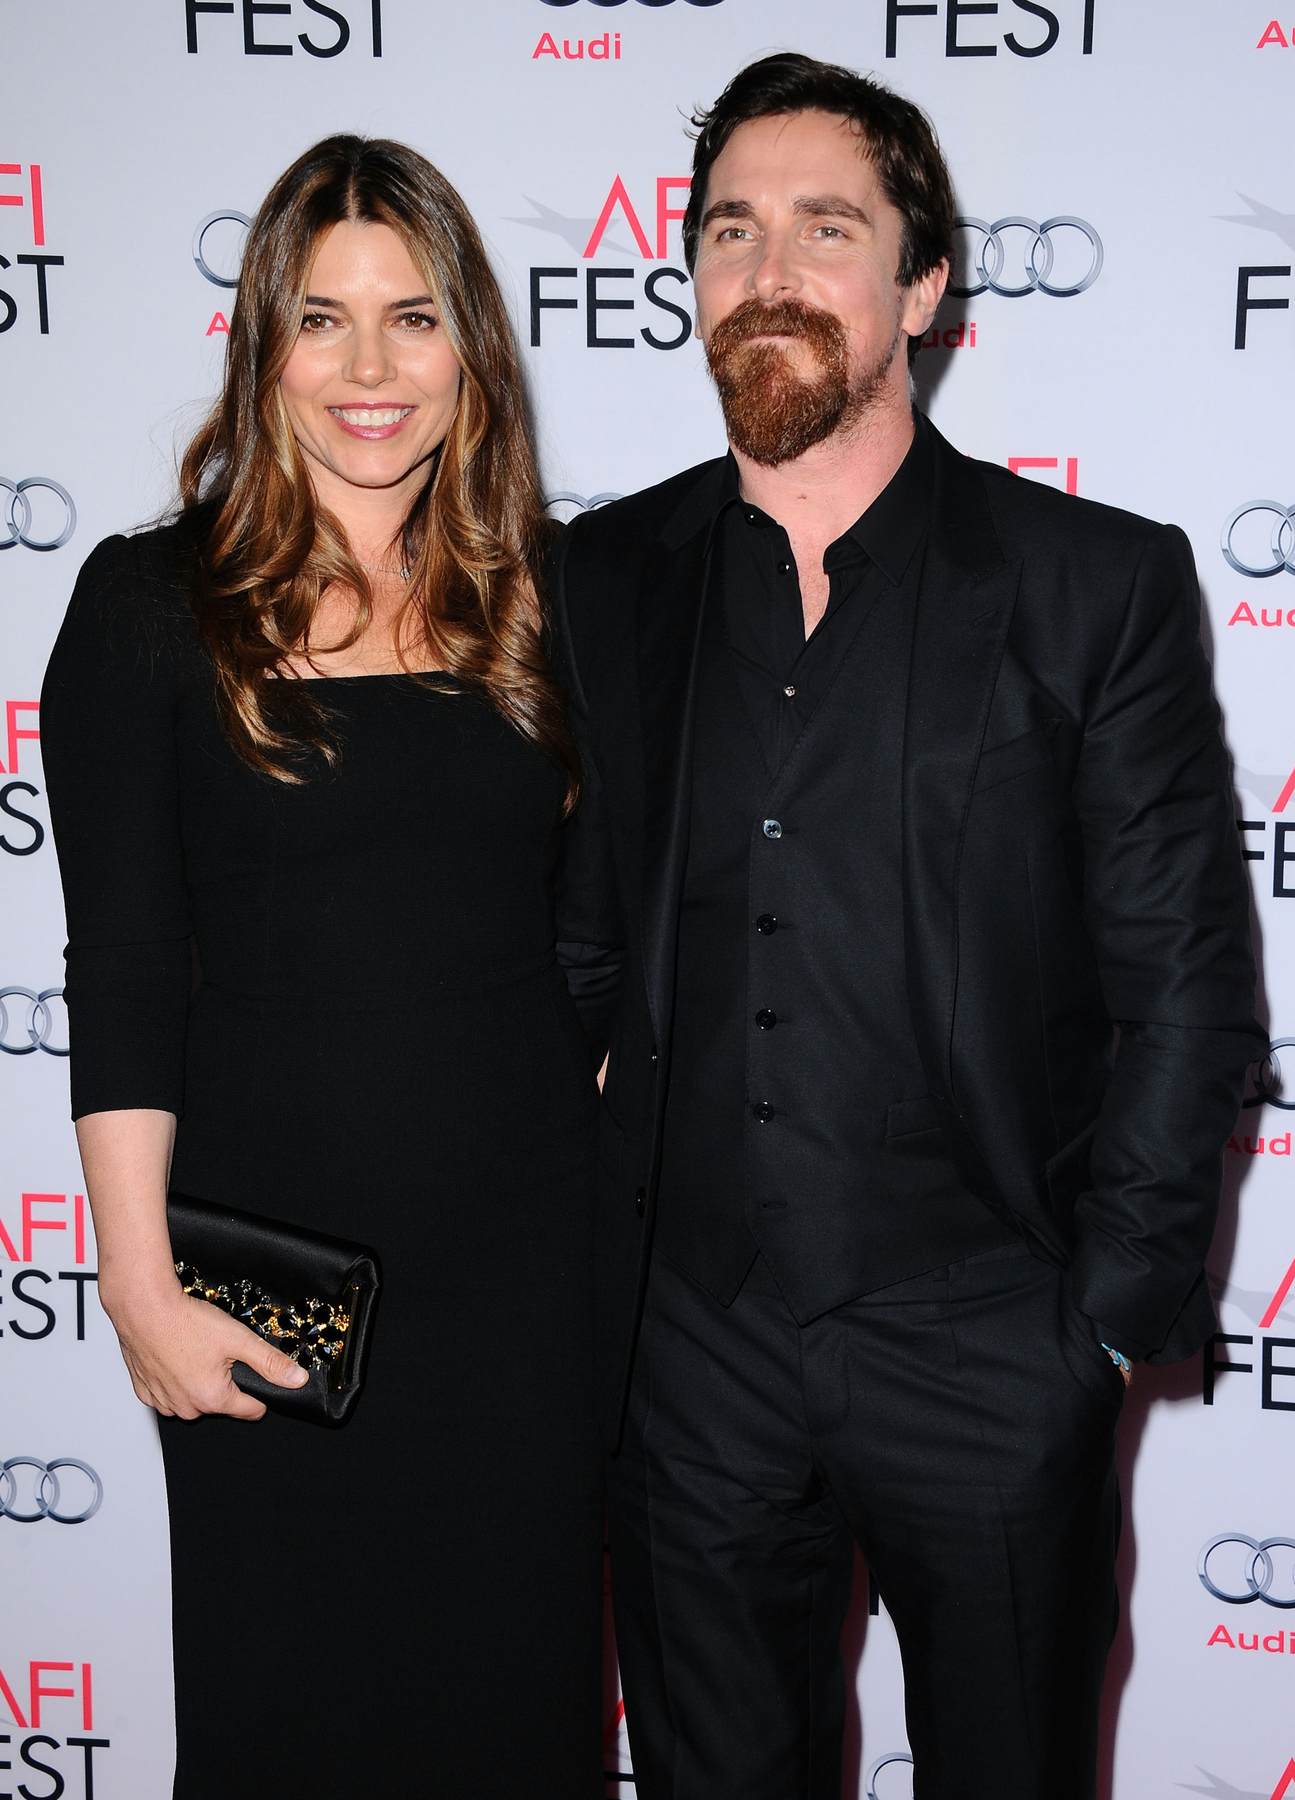 Christian Bale And His Wife Sibi Blazic At The Big Short Afi Fest Closing Night Gala Celeb Donut 